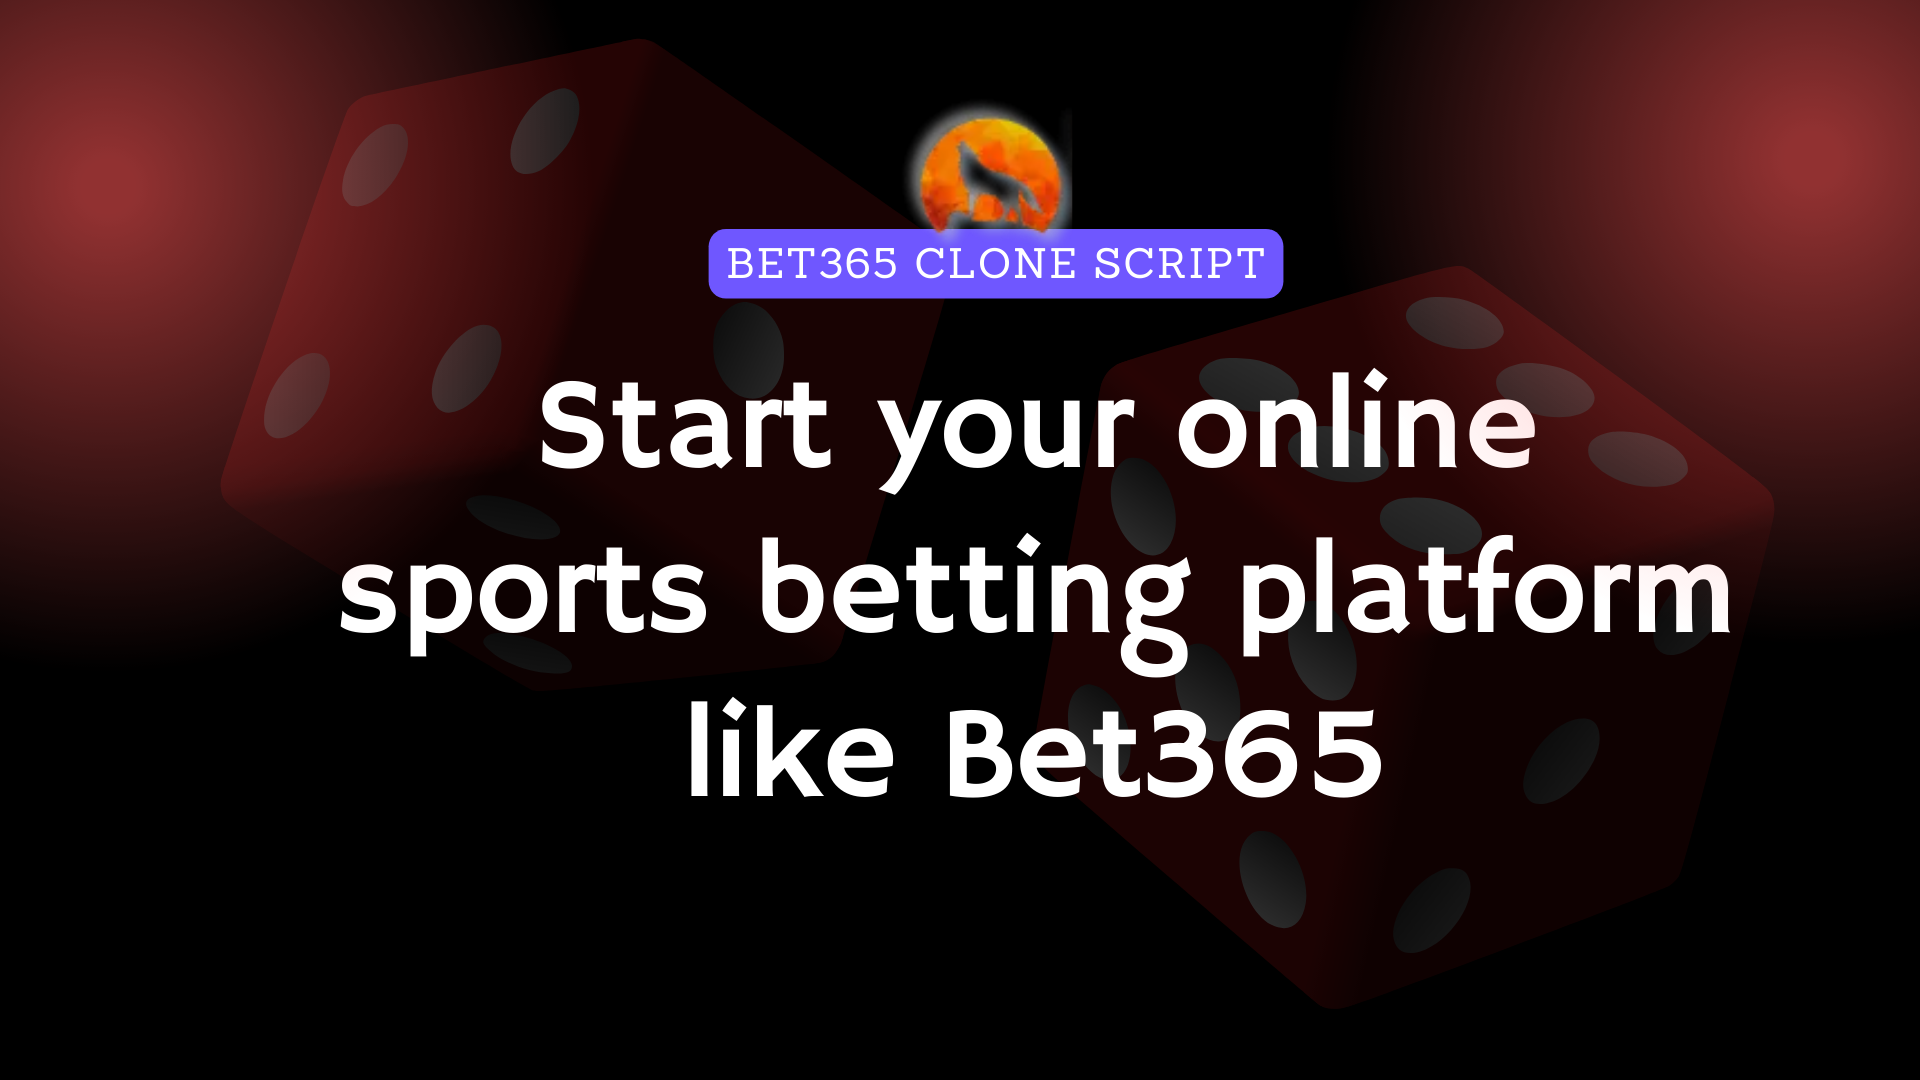 Bet365 Clone Script - Start Your Online Sports Betting Platform